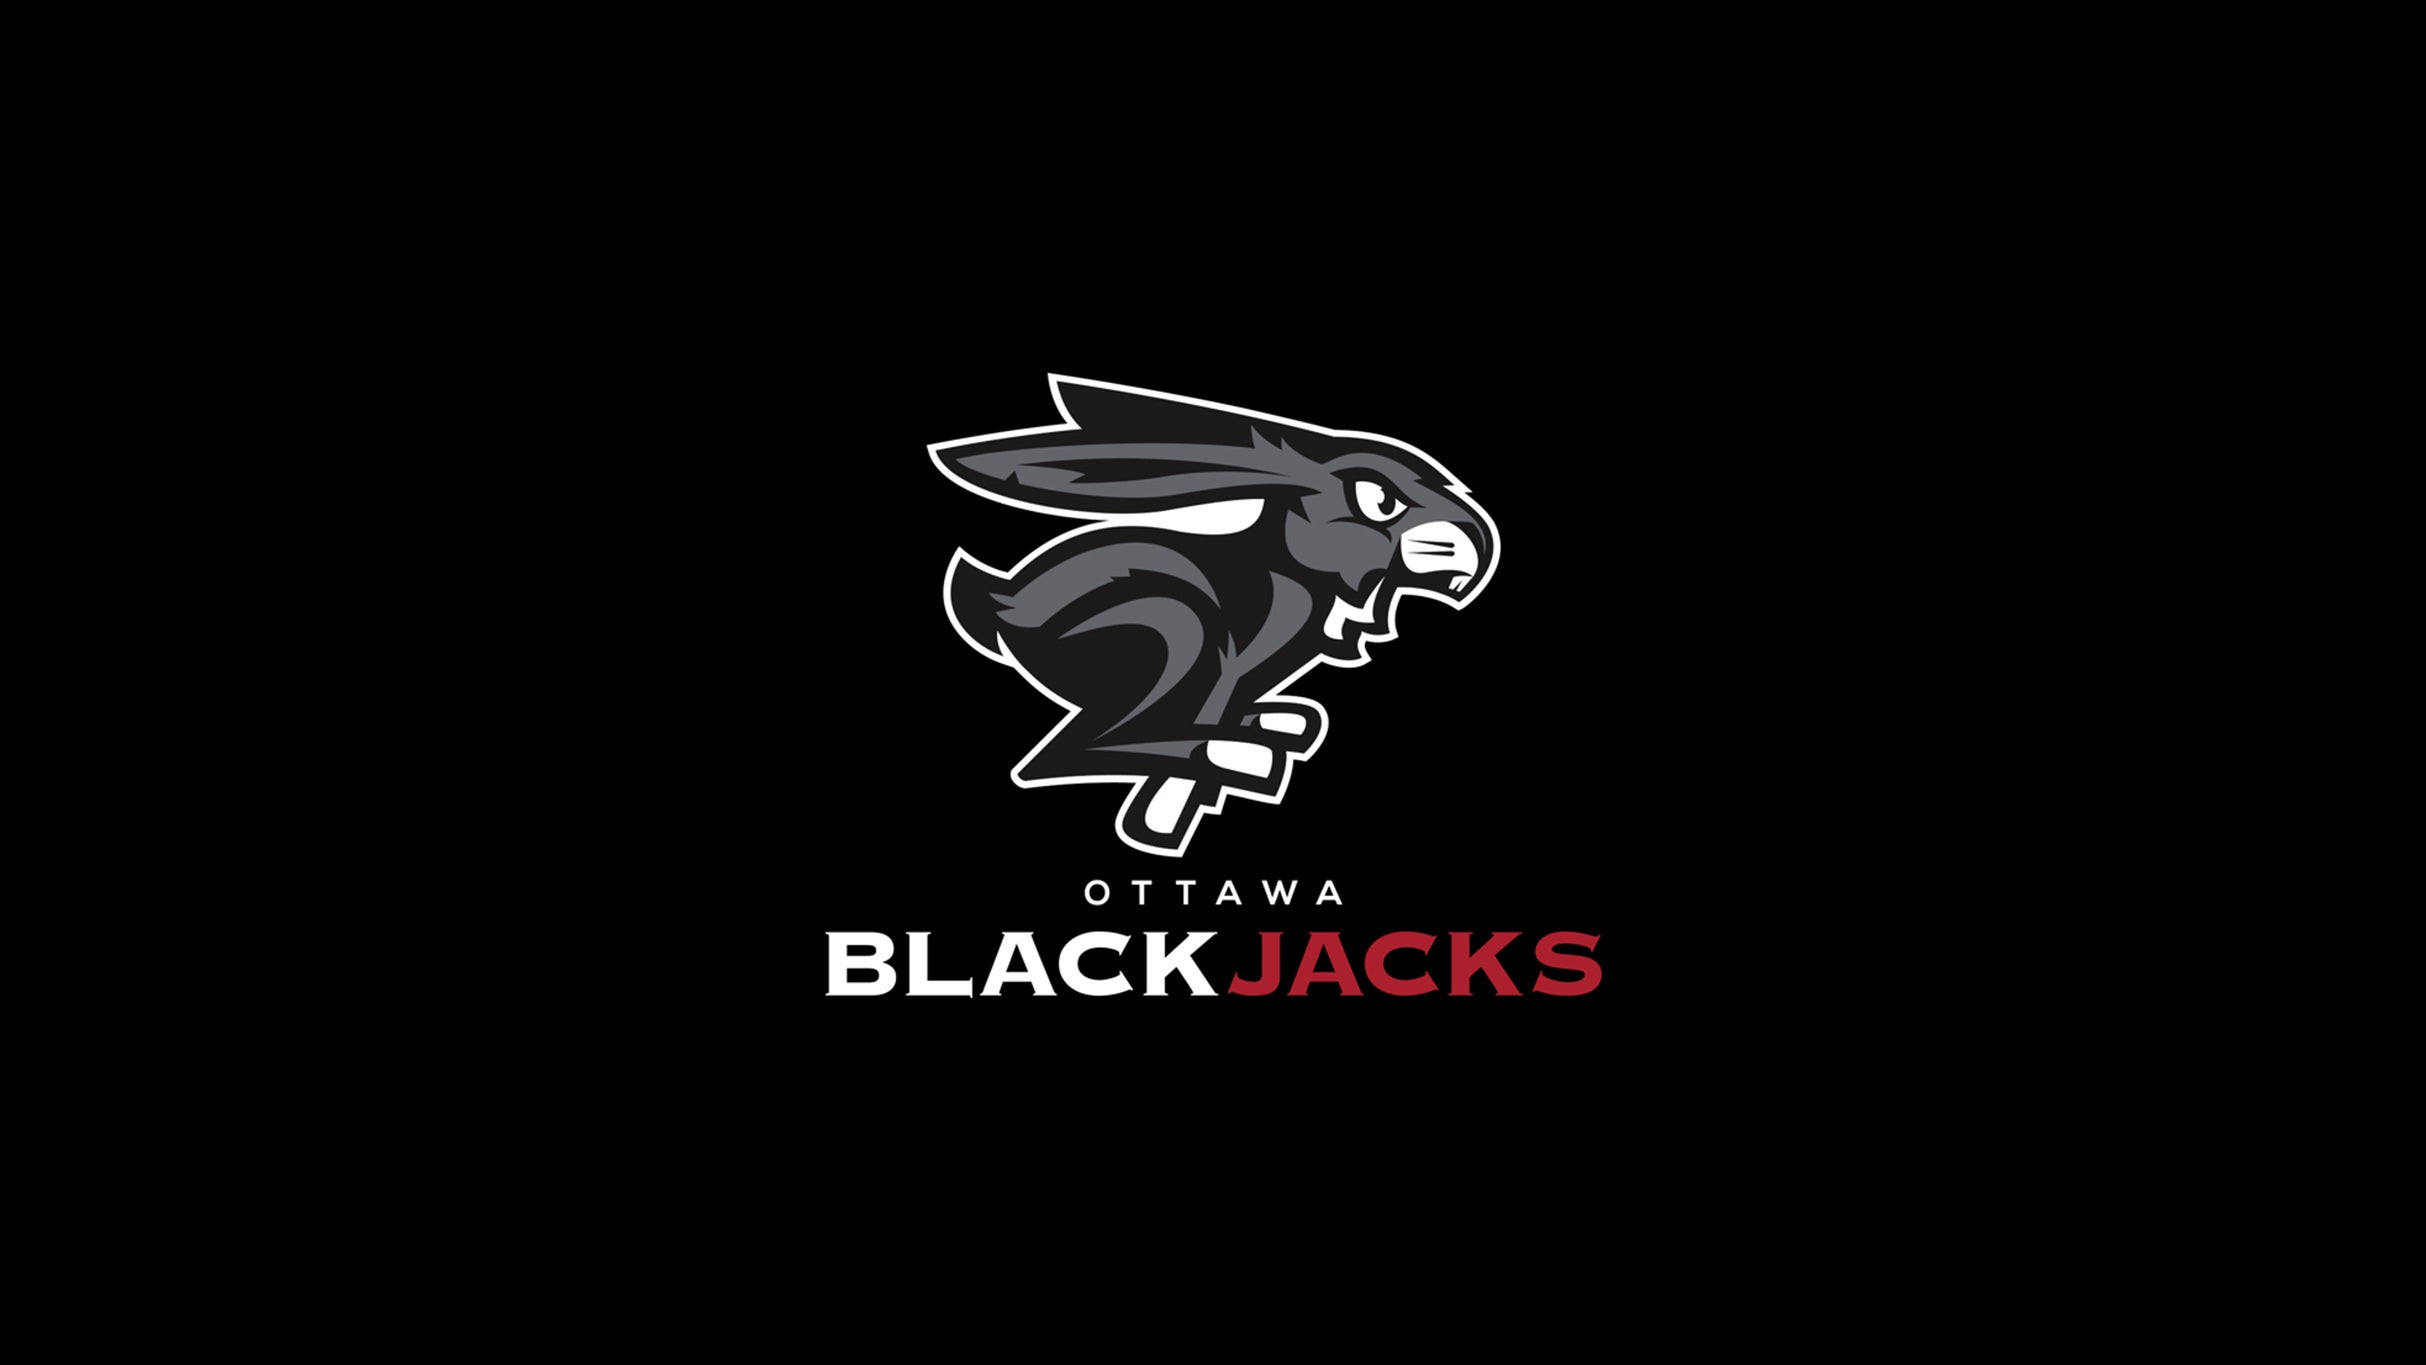 Ottawa BlackJacks vs. Saskatchewan Rattlers presale code